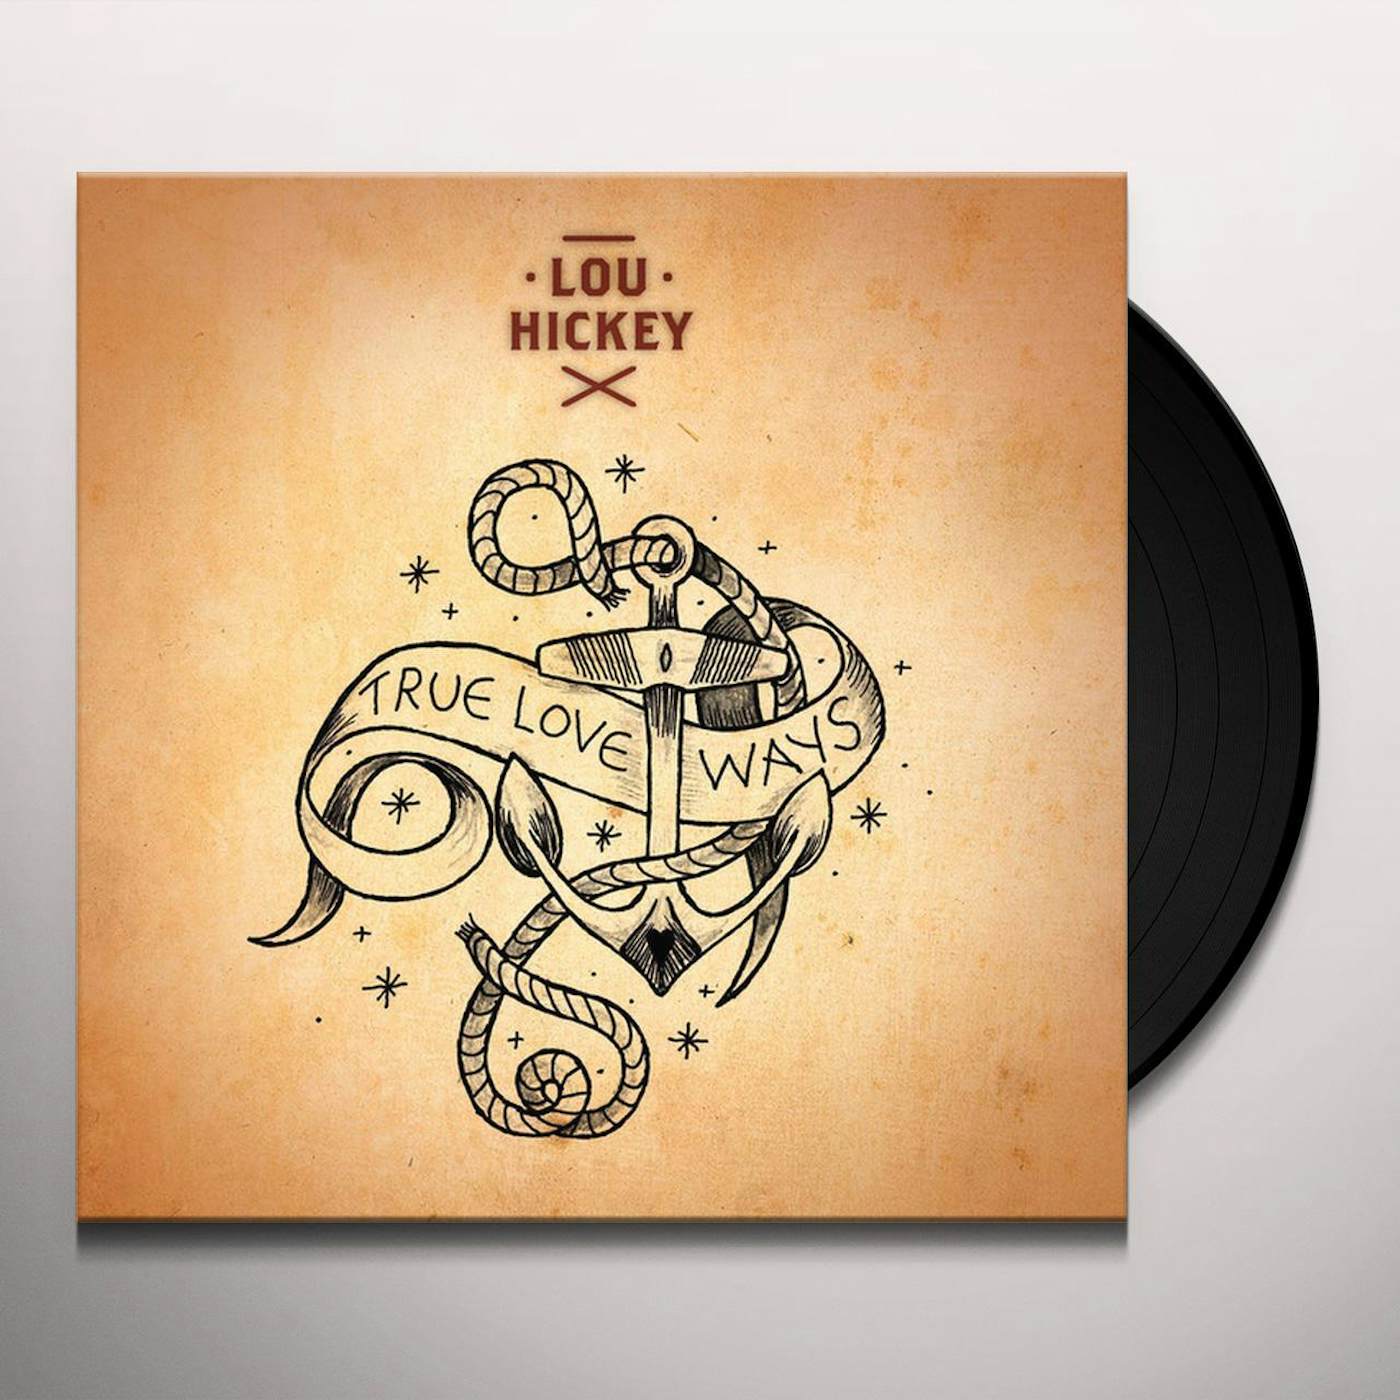 Lou Hickey True Love Ways Vinyl Record